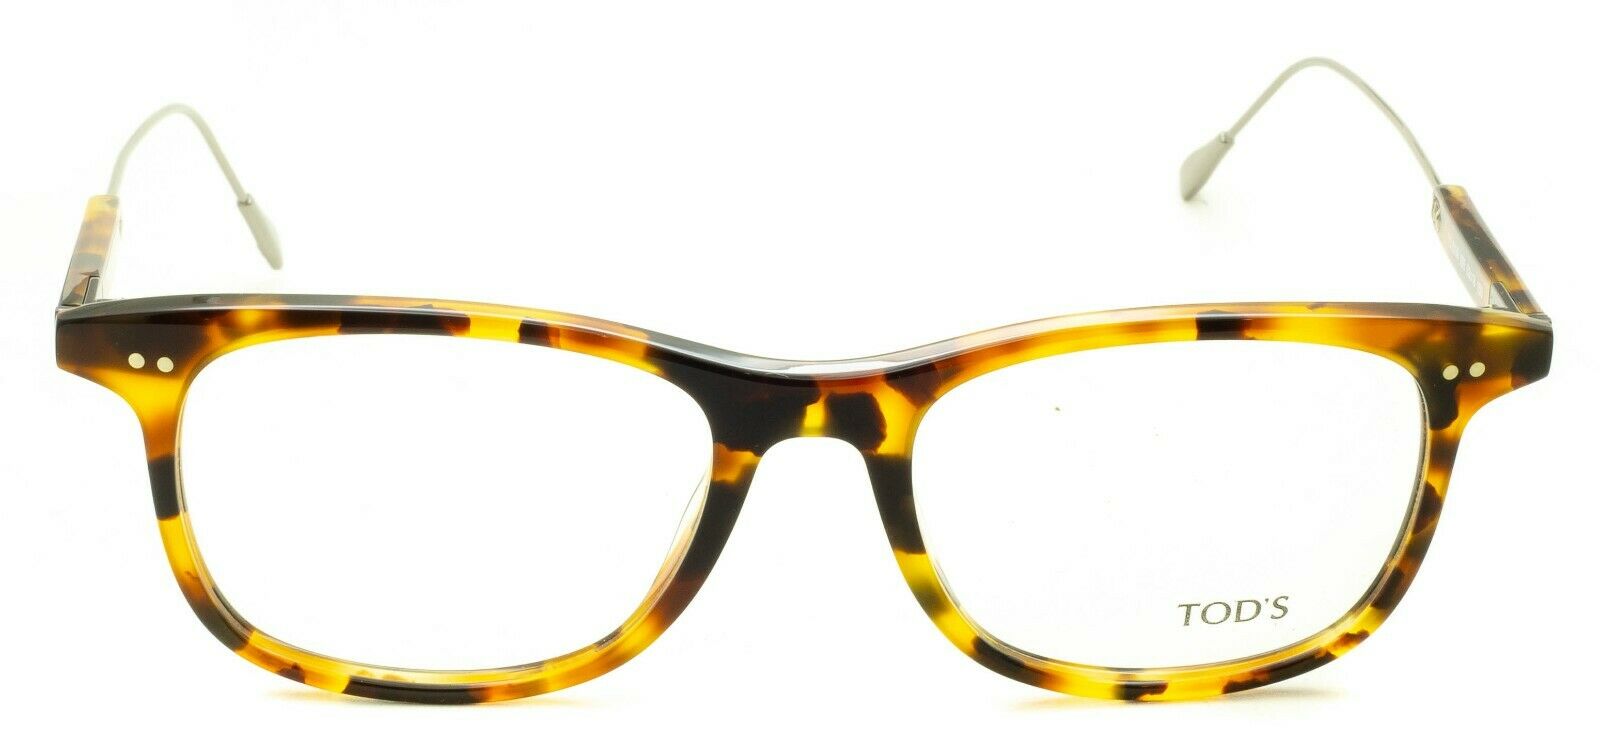 TOD'S TO 5189 055 53mm Eyewear FRAMES Glasses RX Optical Eyeglasses New - Italy